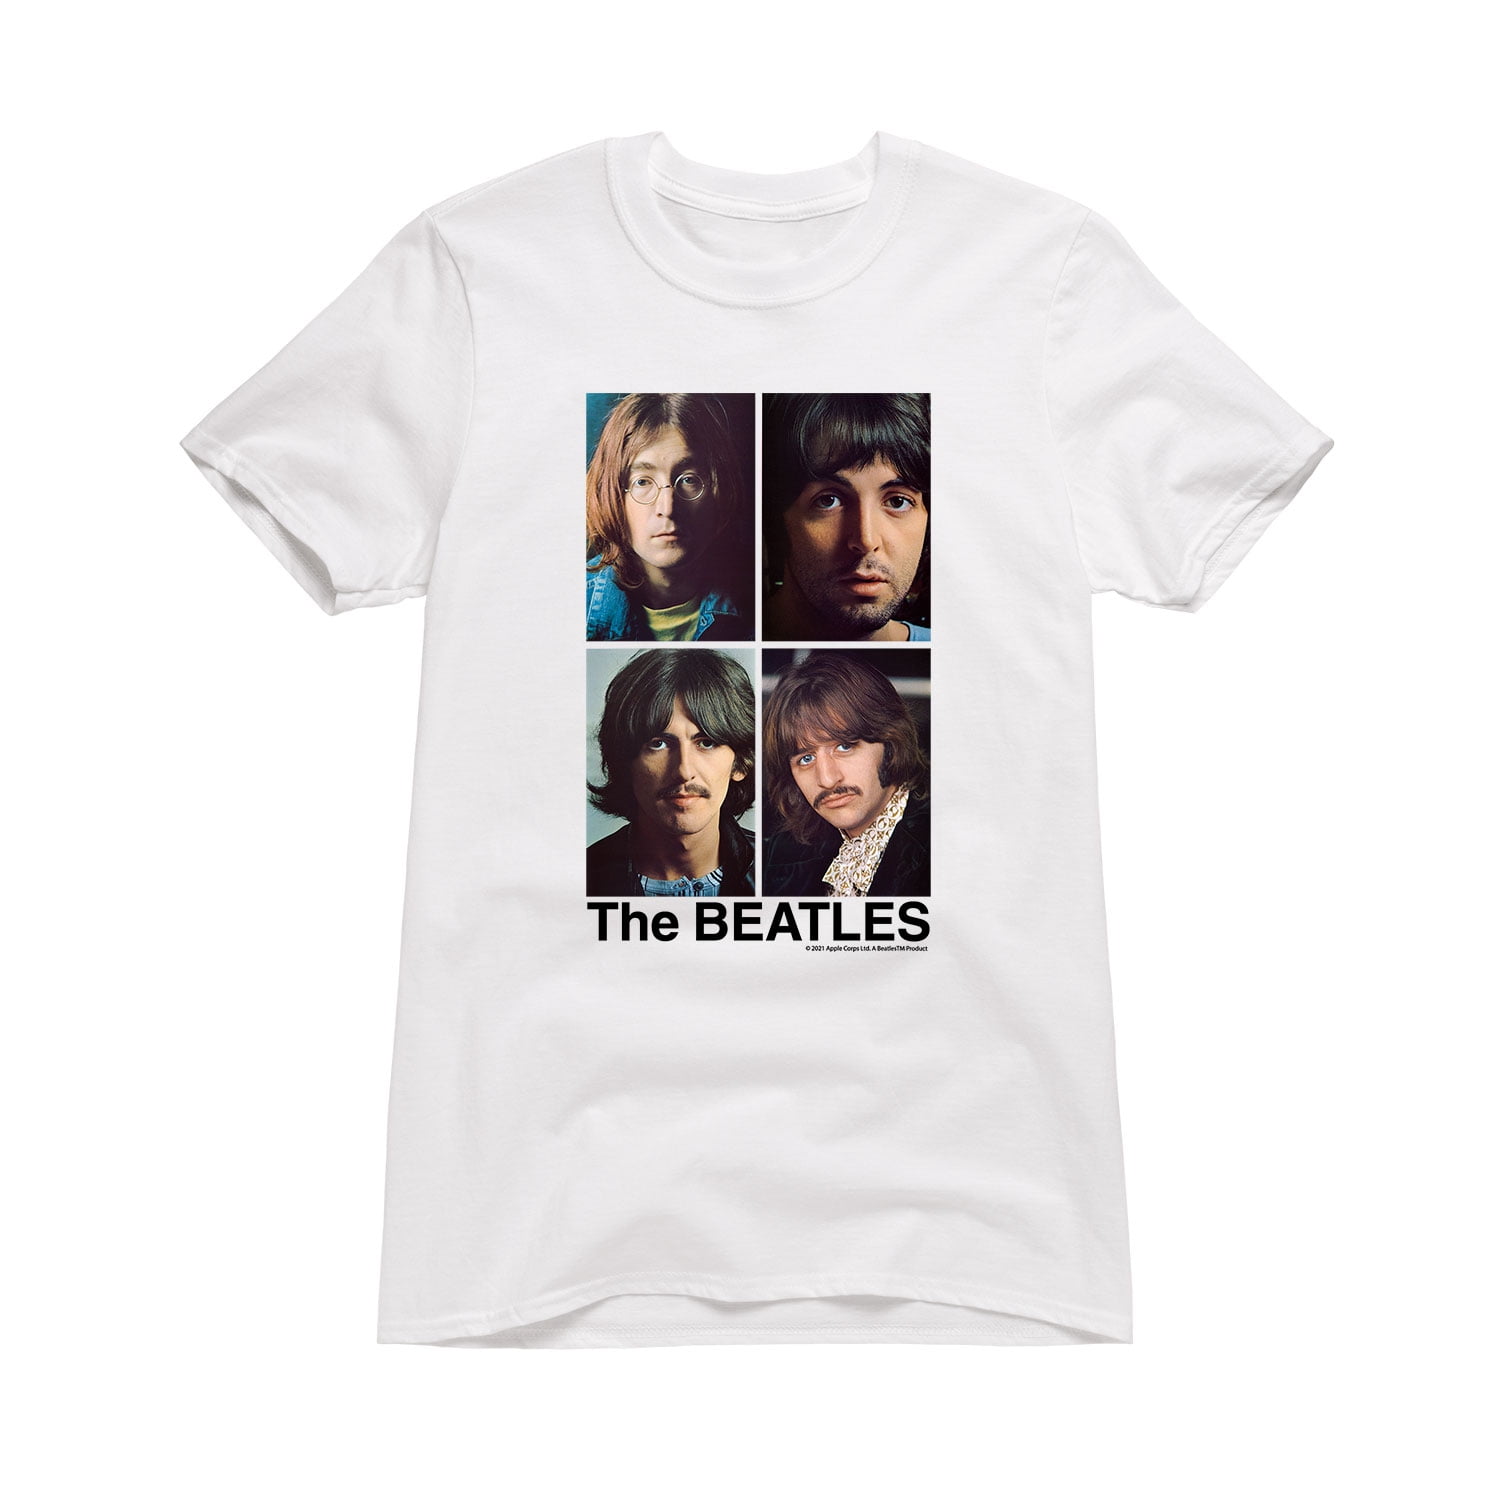 Kids Childrens John Lennon The Beatles Iconic Rock T-shirt Sizes Age 5 to 13 